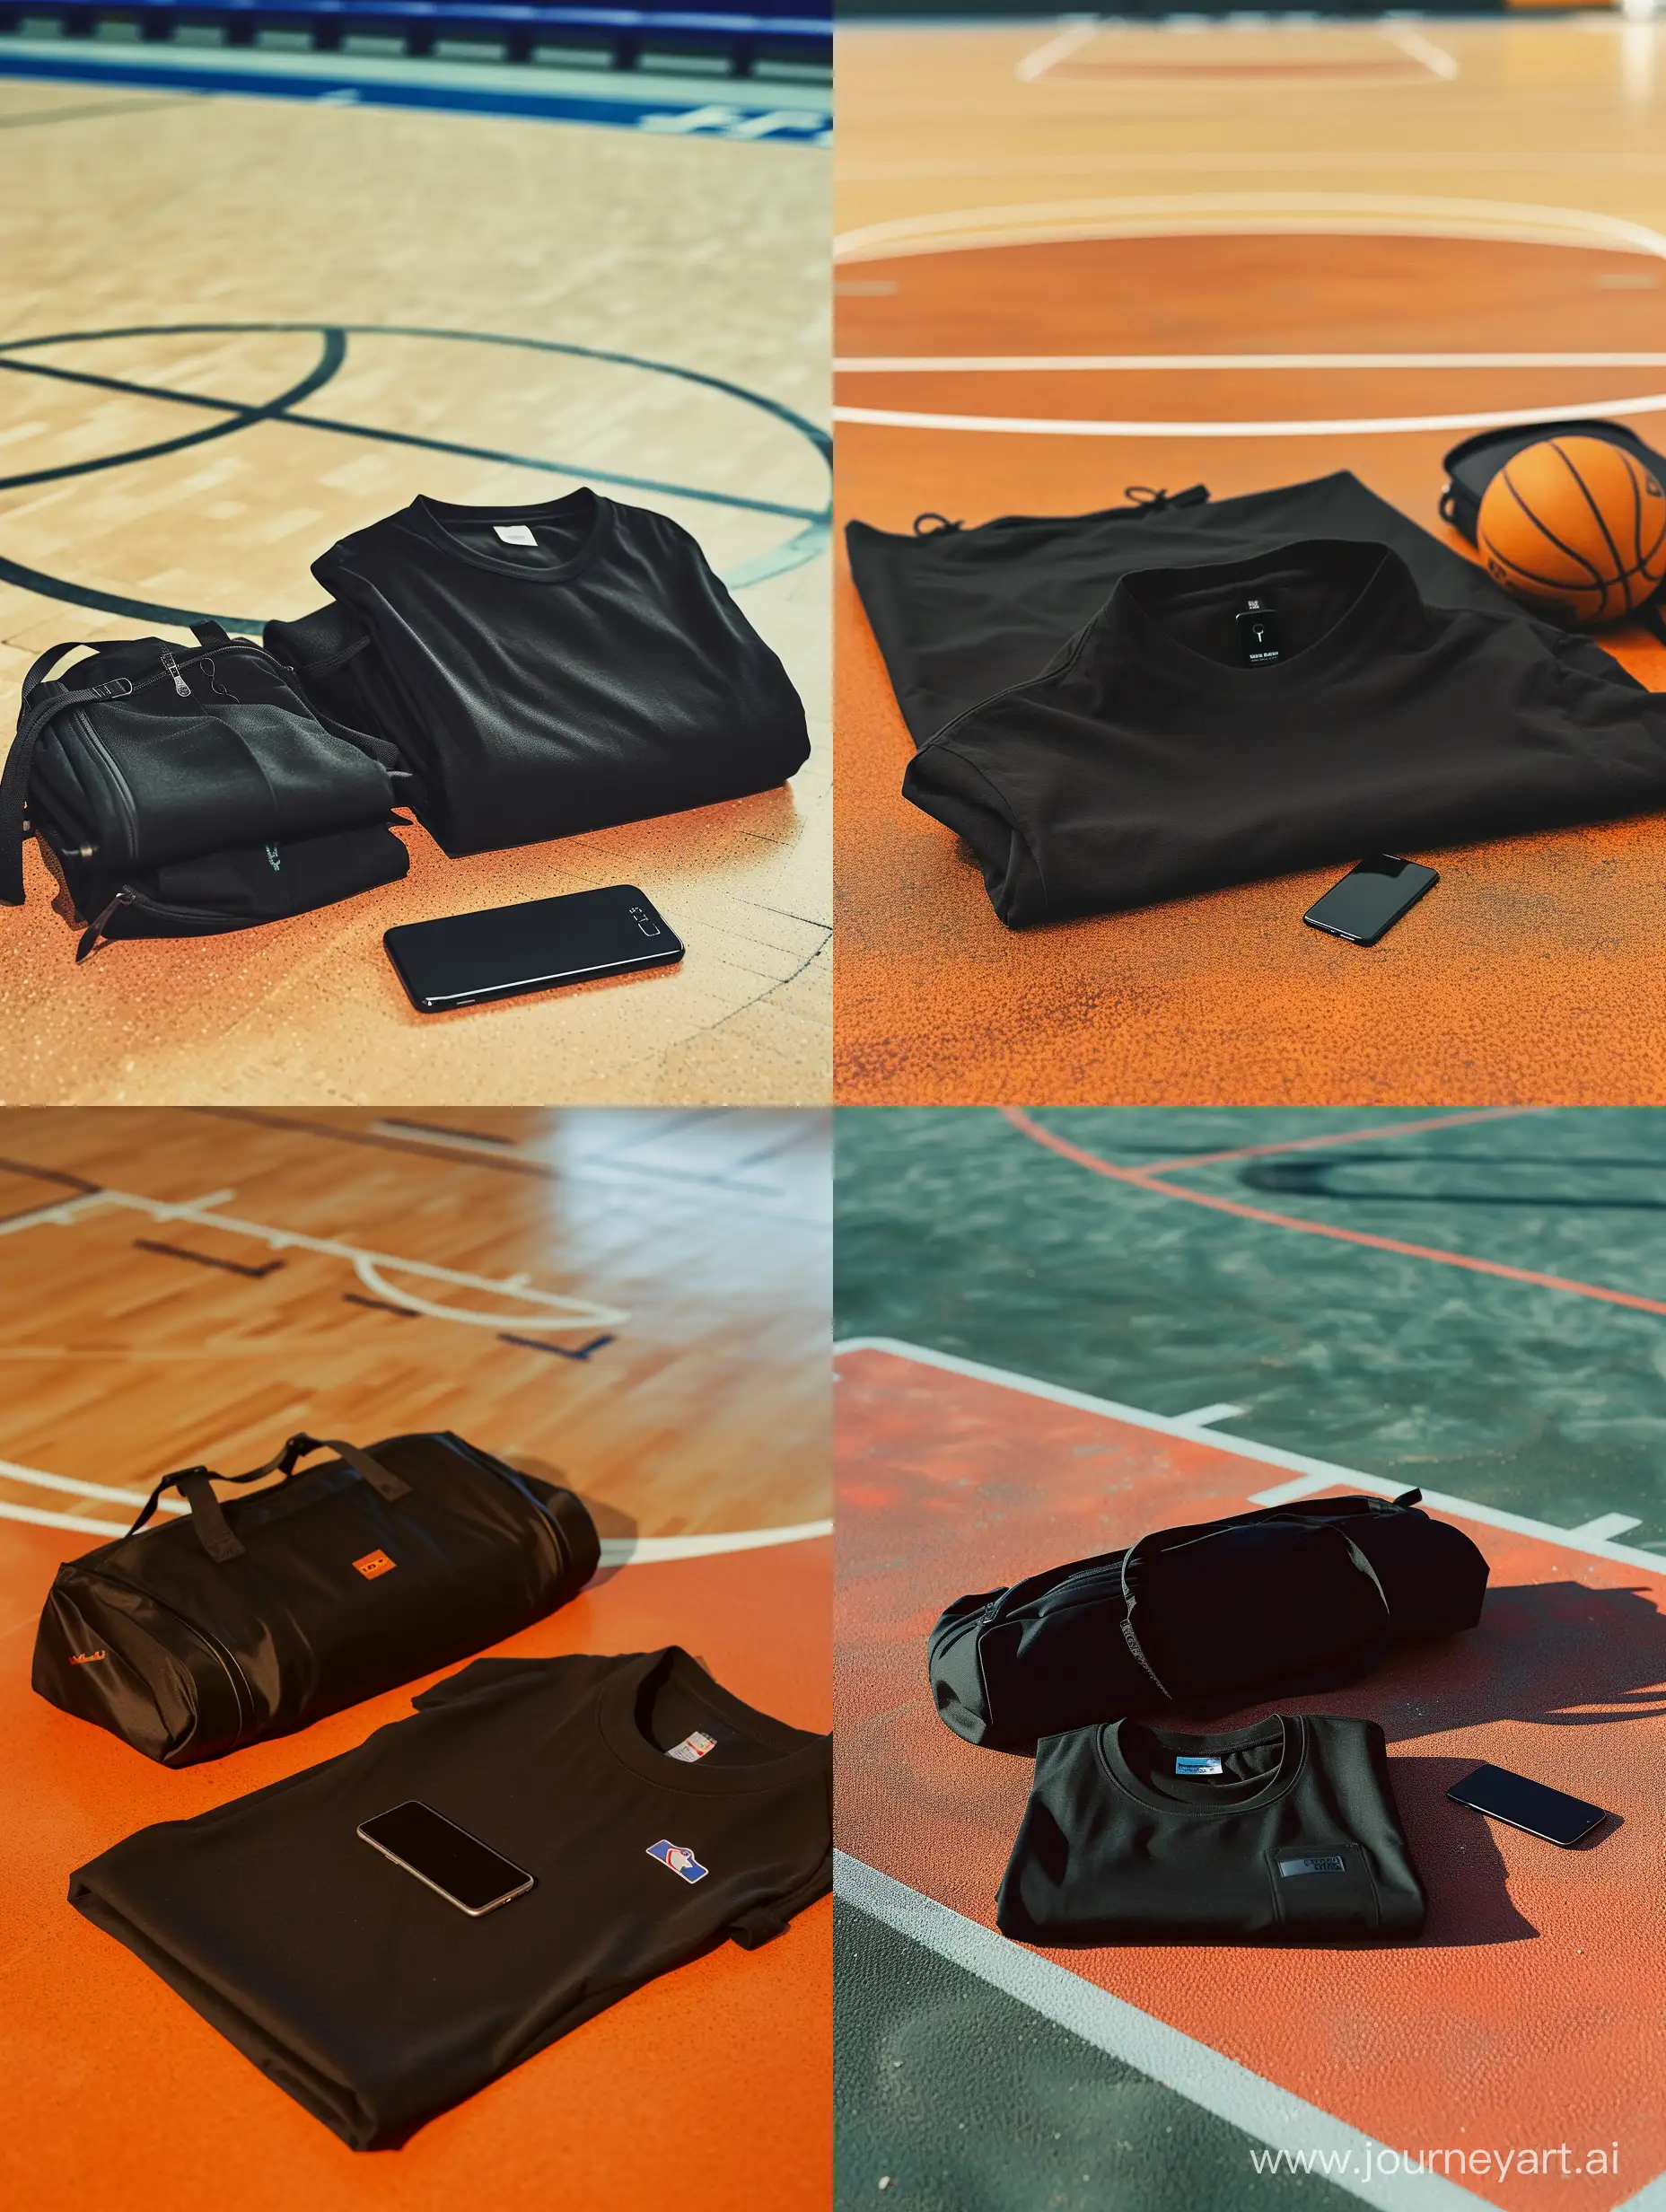 Folded-Black-TShirt-Mobile-Phone-and-Sports-Bag-on-Basketball-Court